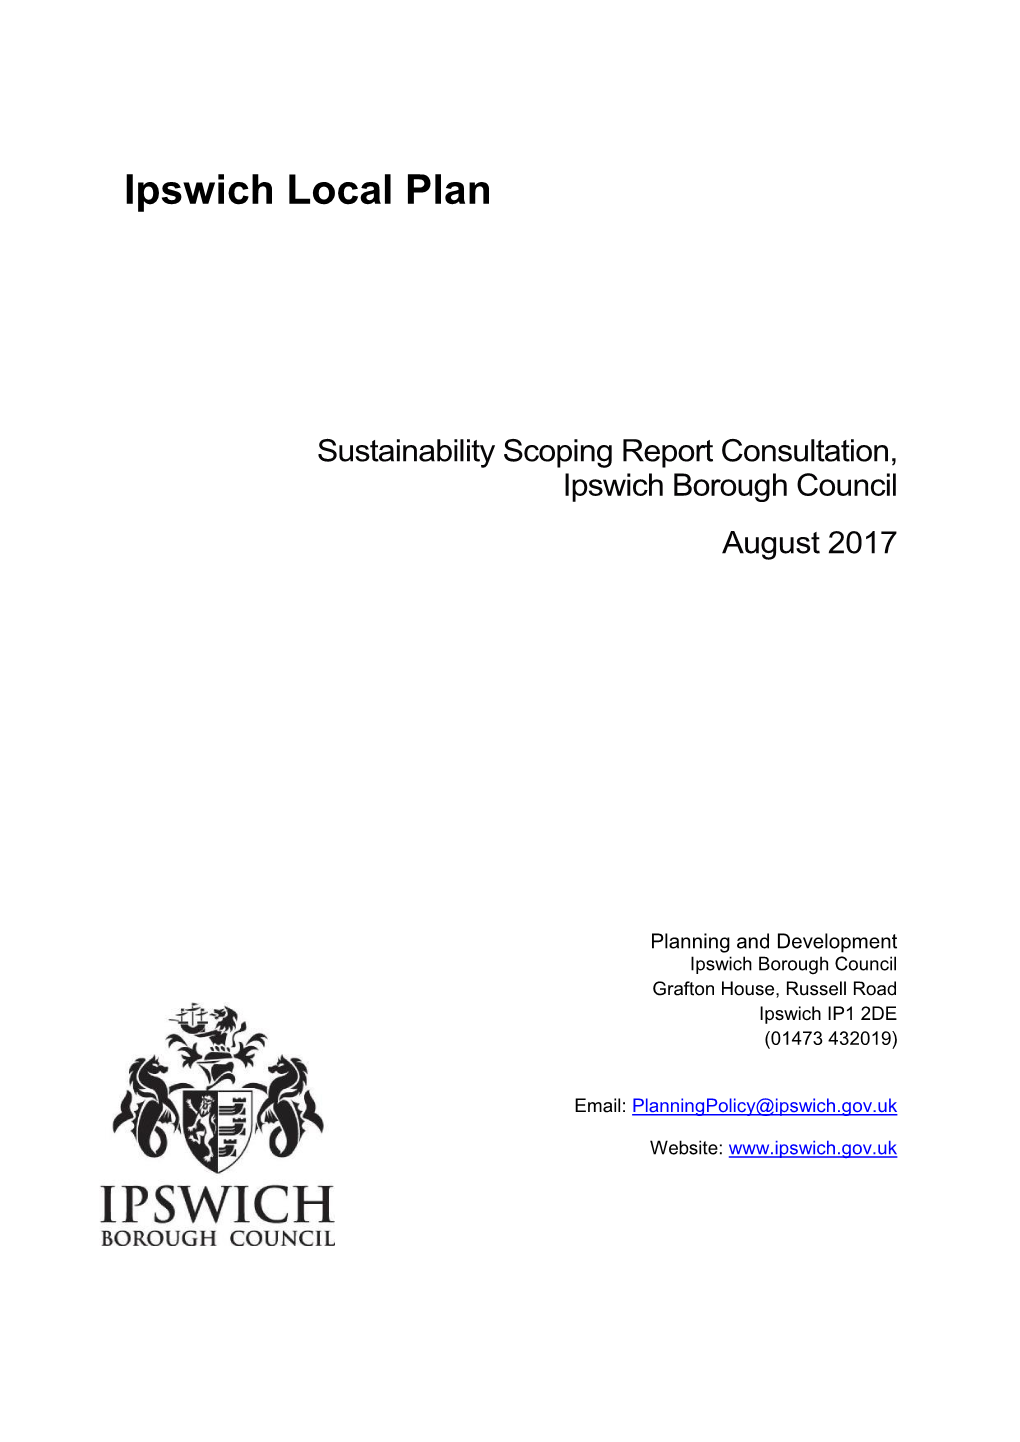 Ipswich Local Plan Sustainability Appraisal Scoping Report